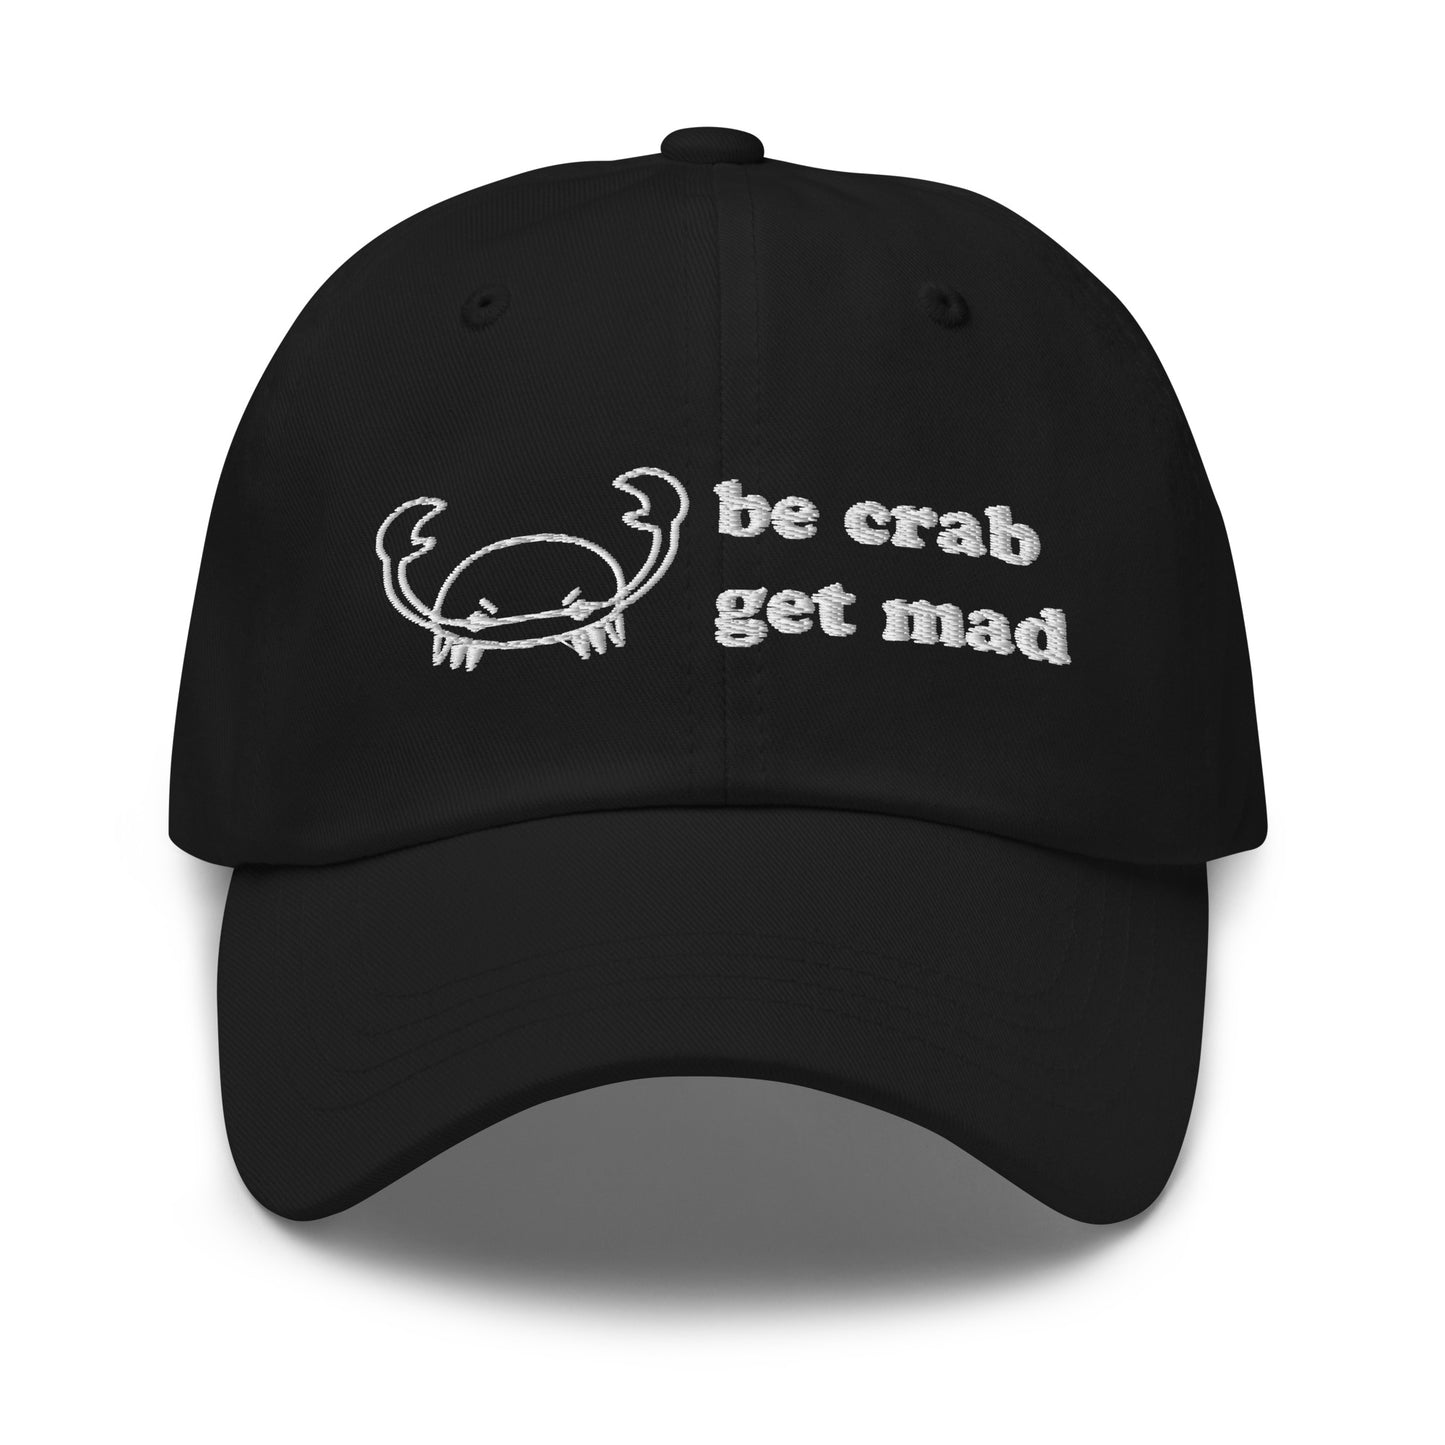 Be Crab hat